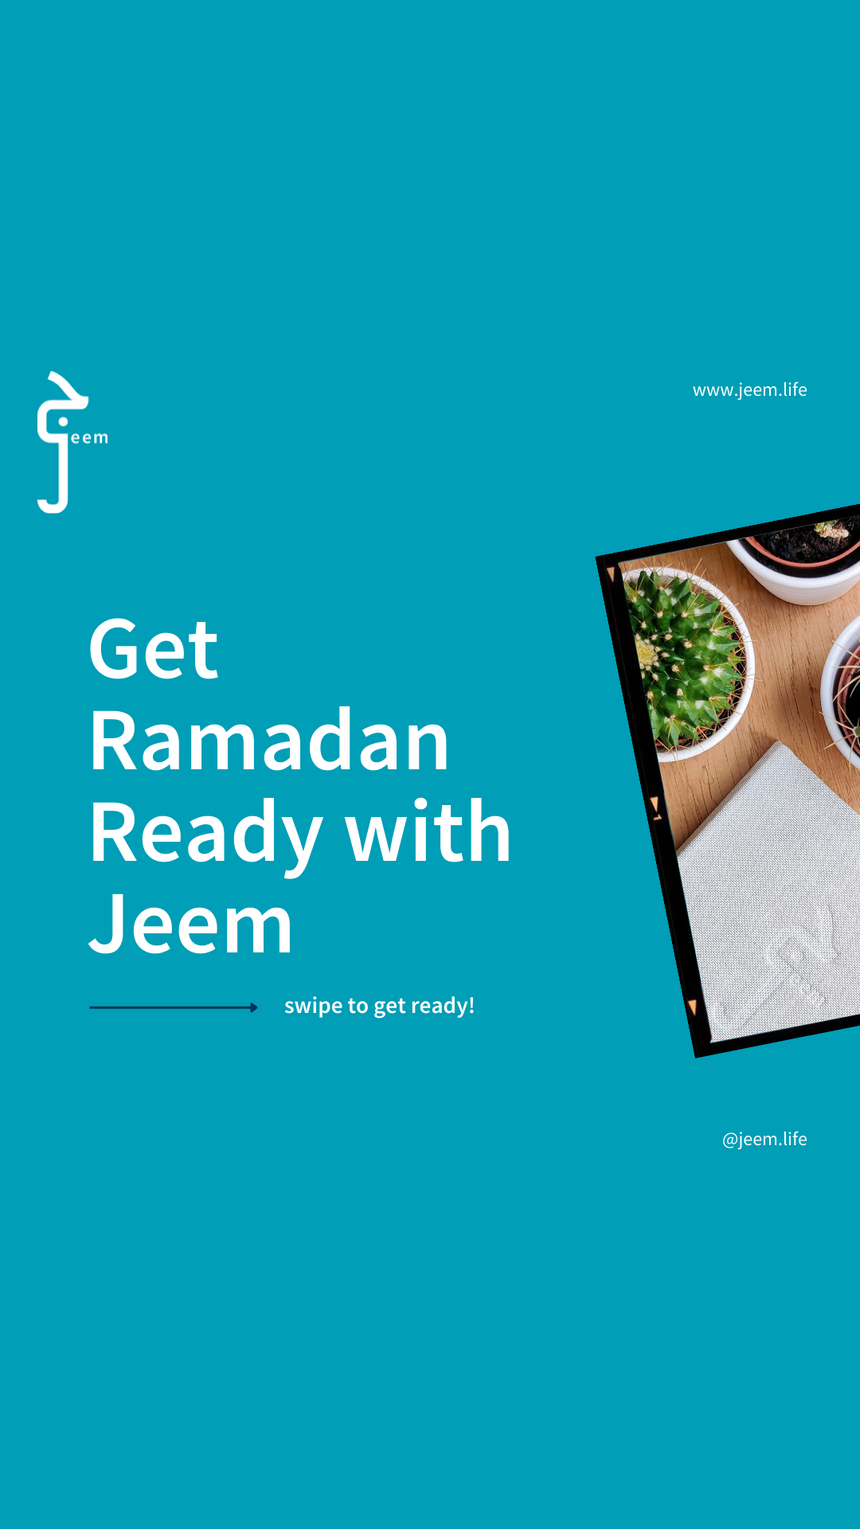 30 Days of Goodness Ramadan Challenge